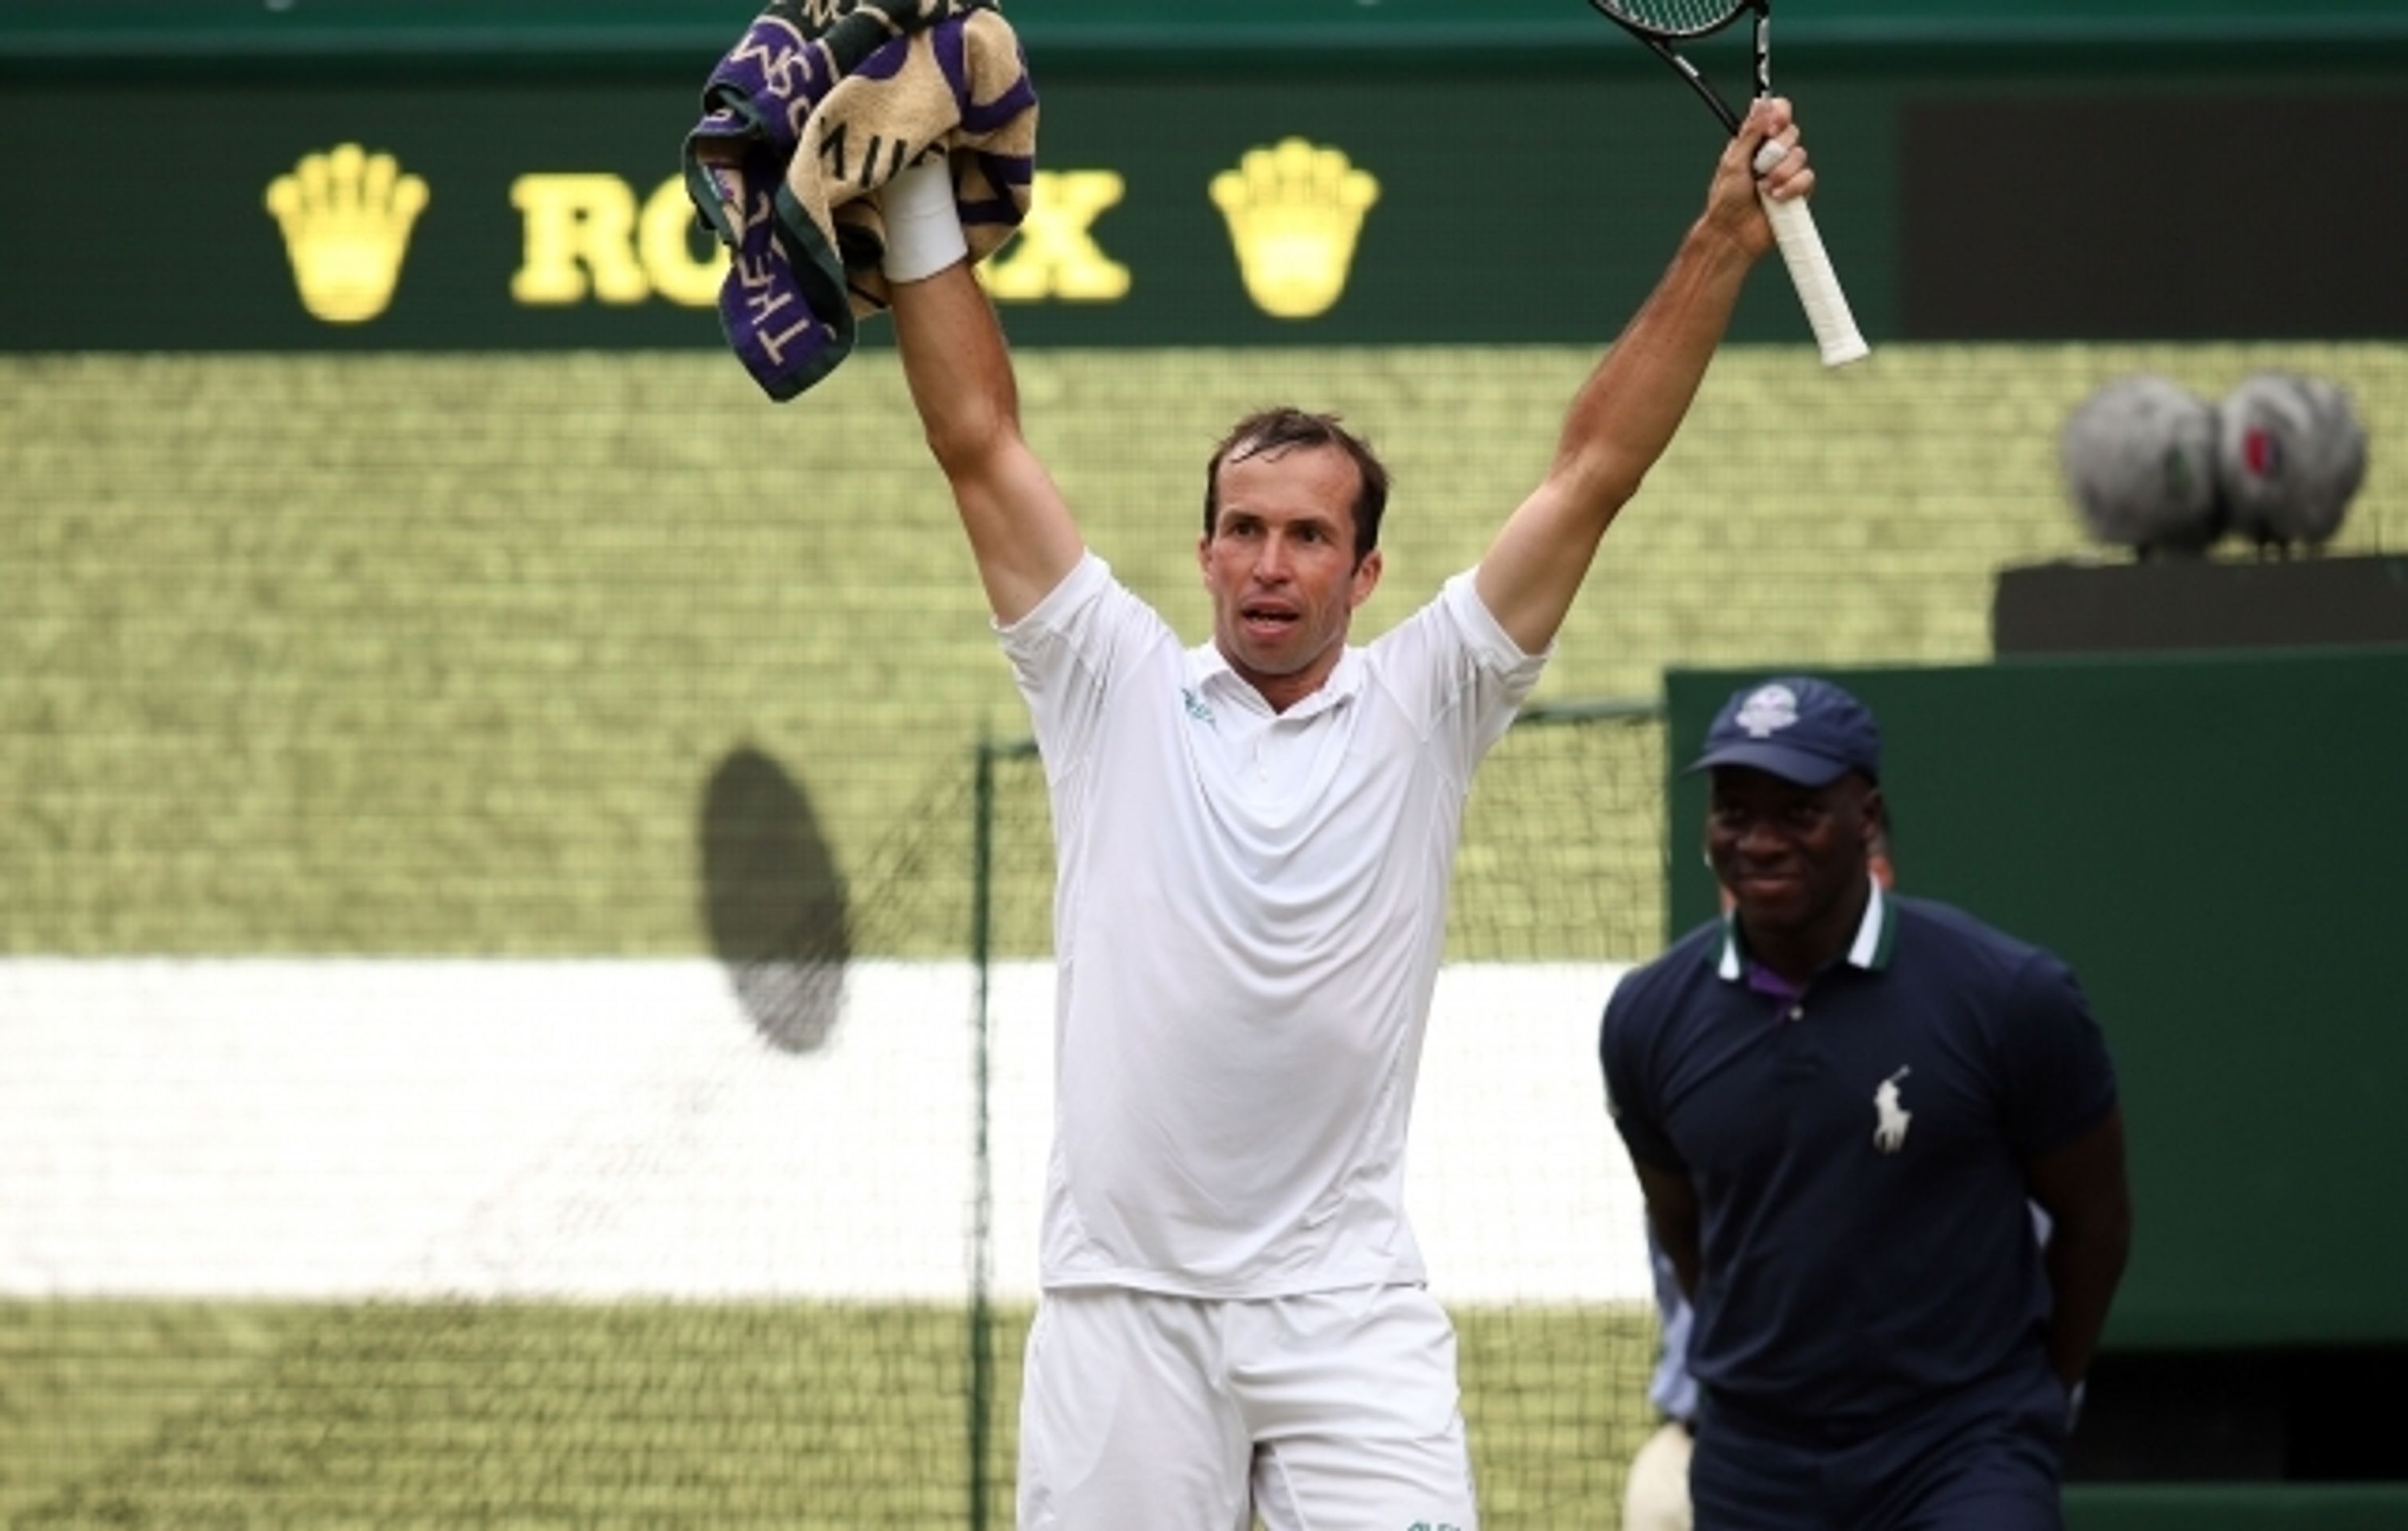 GALERIE: Radek Štěpánek - Nova Djokovič - 2 - GALERIE: Radek Štěpánek - Novak Djokovič, Wimbledon 2014 (2/13)